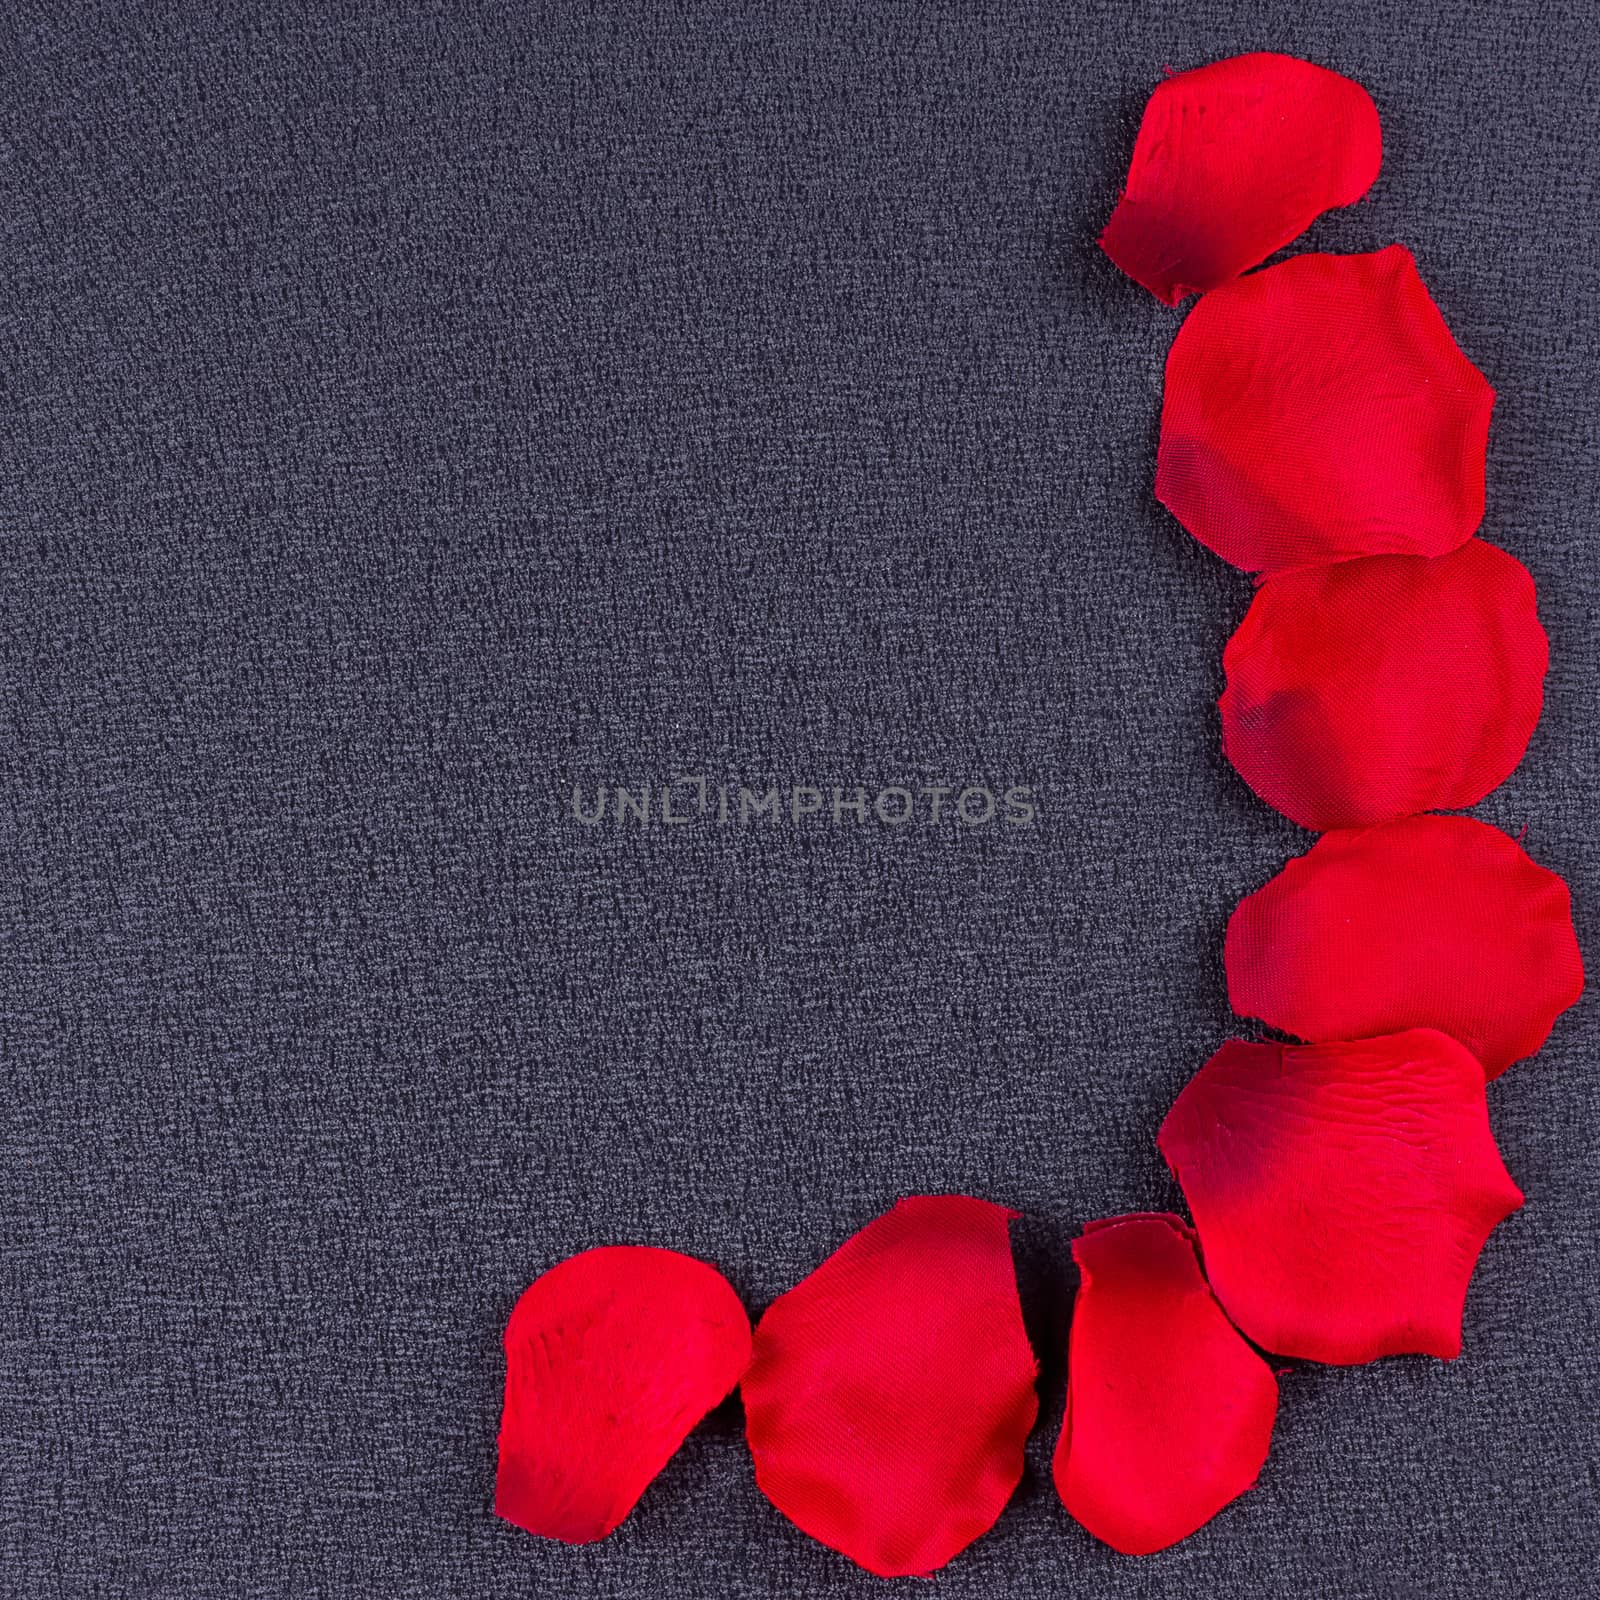 Artificial petals red roses black background frame